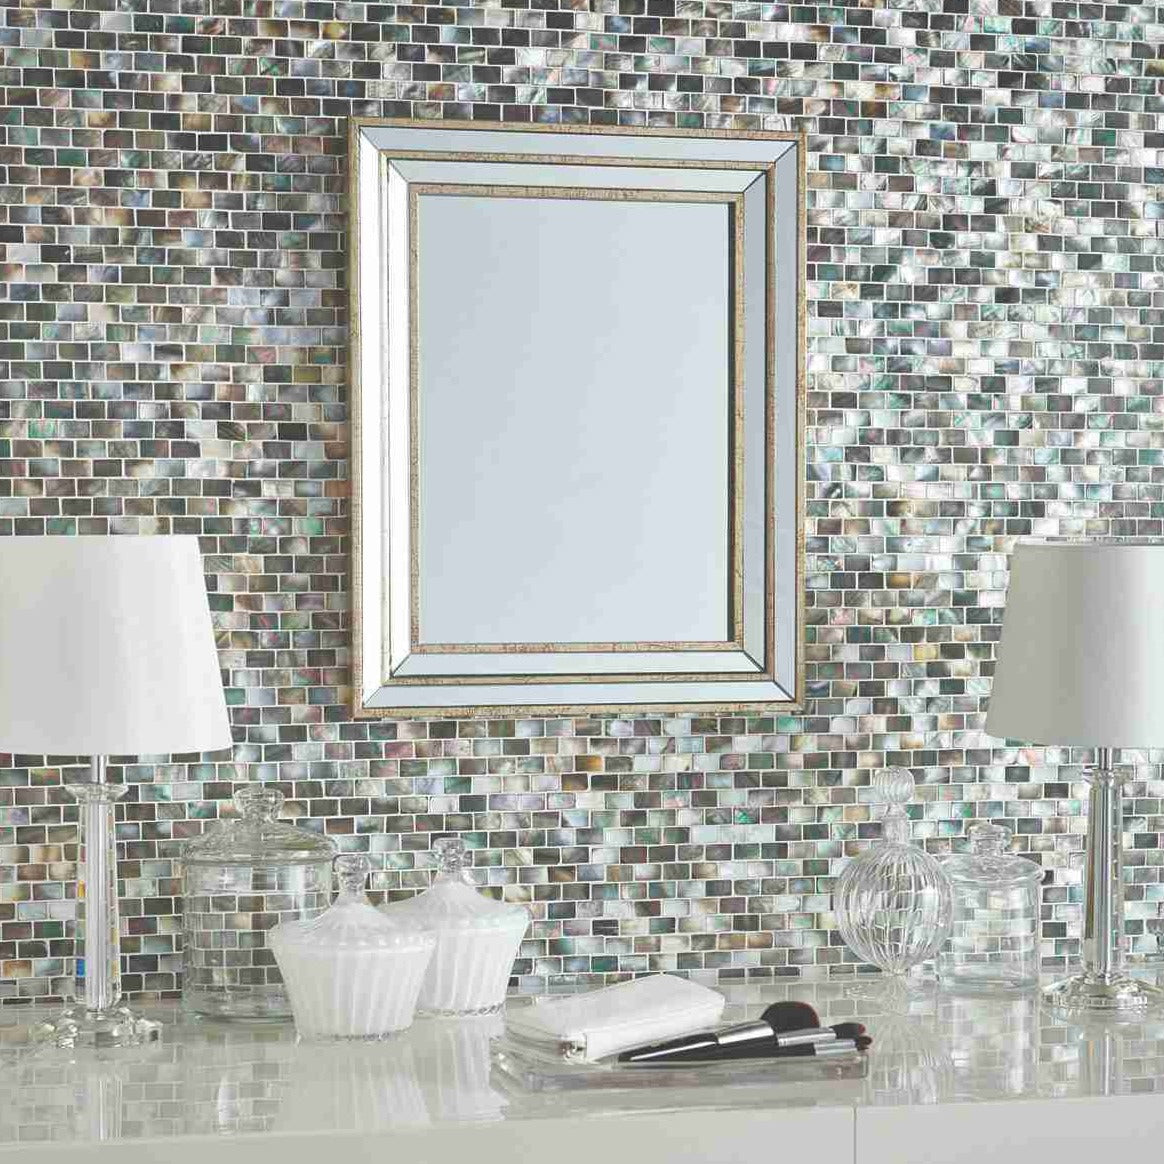 Original Style Mosaics Mother of Pearl (Dark) Brickbond Shell Mosaic Tile 31x32cm